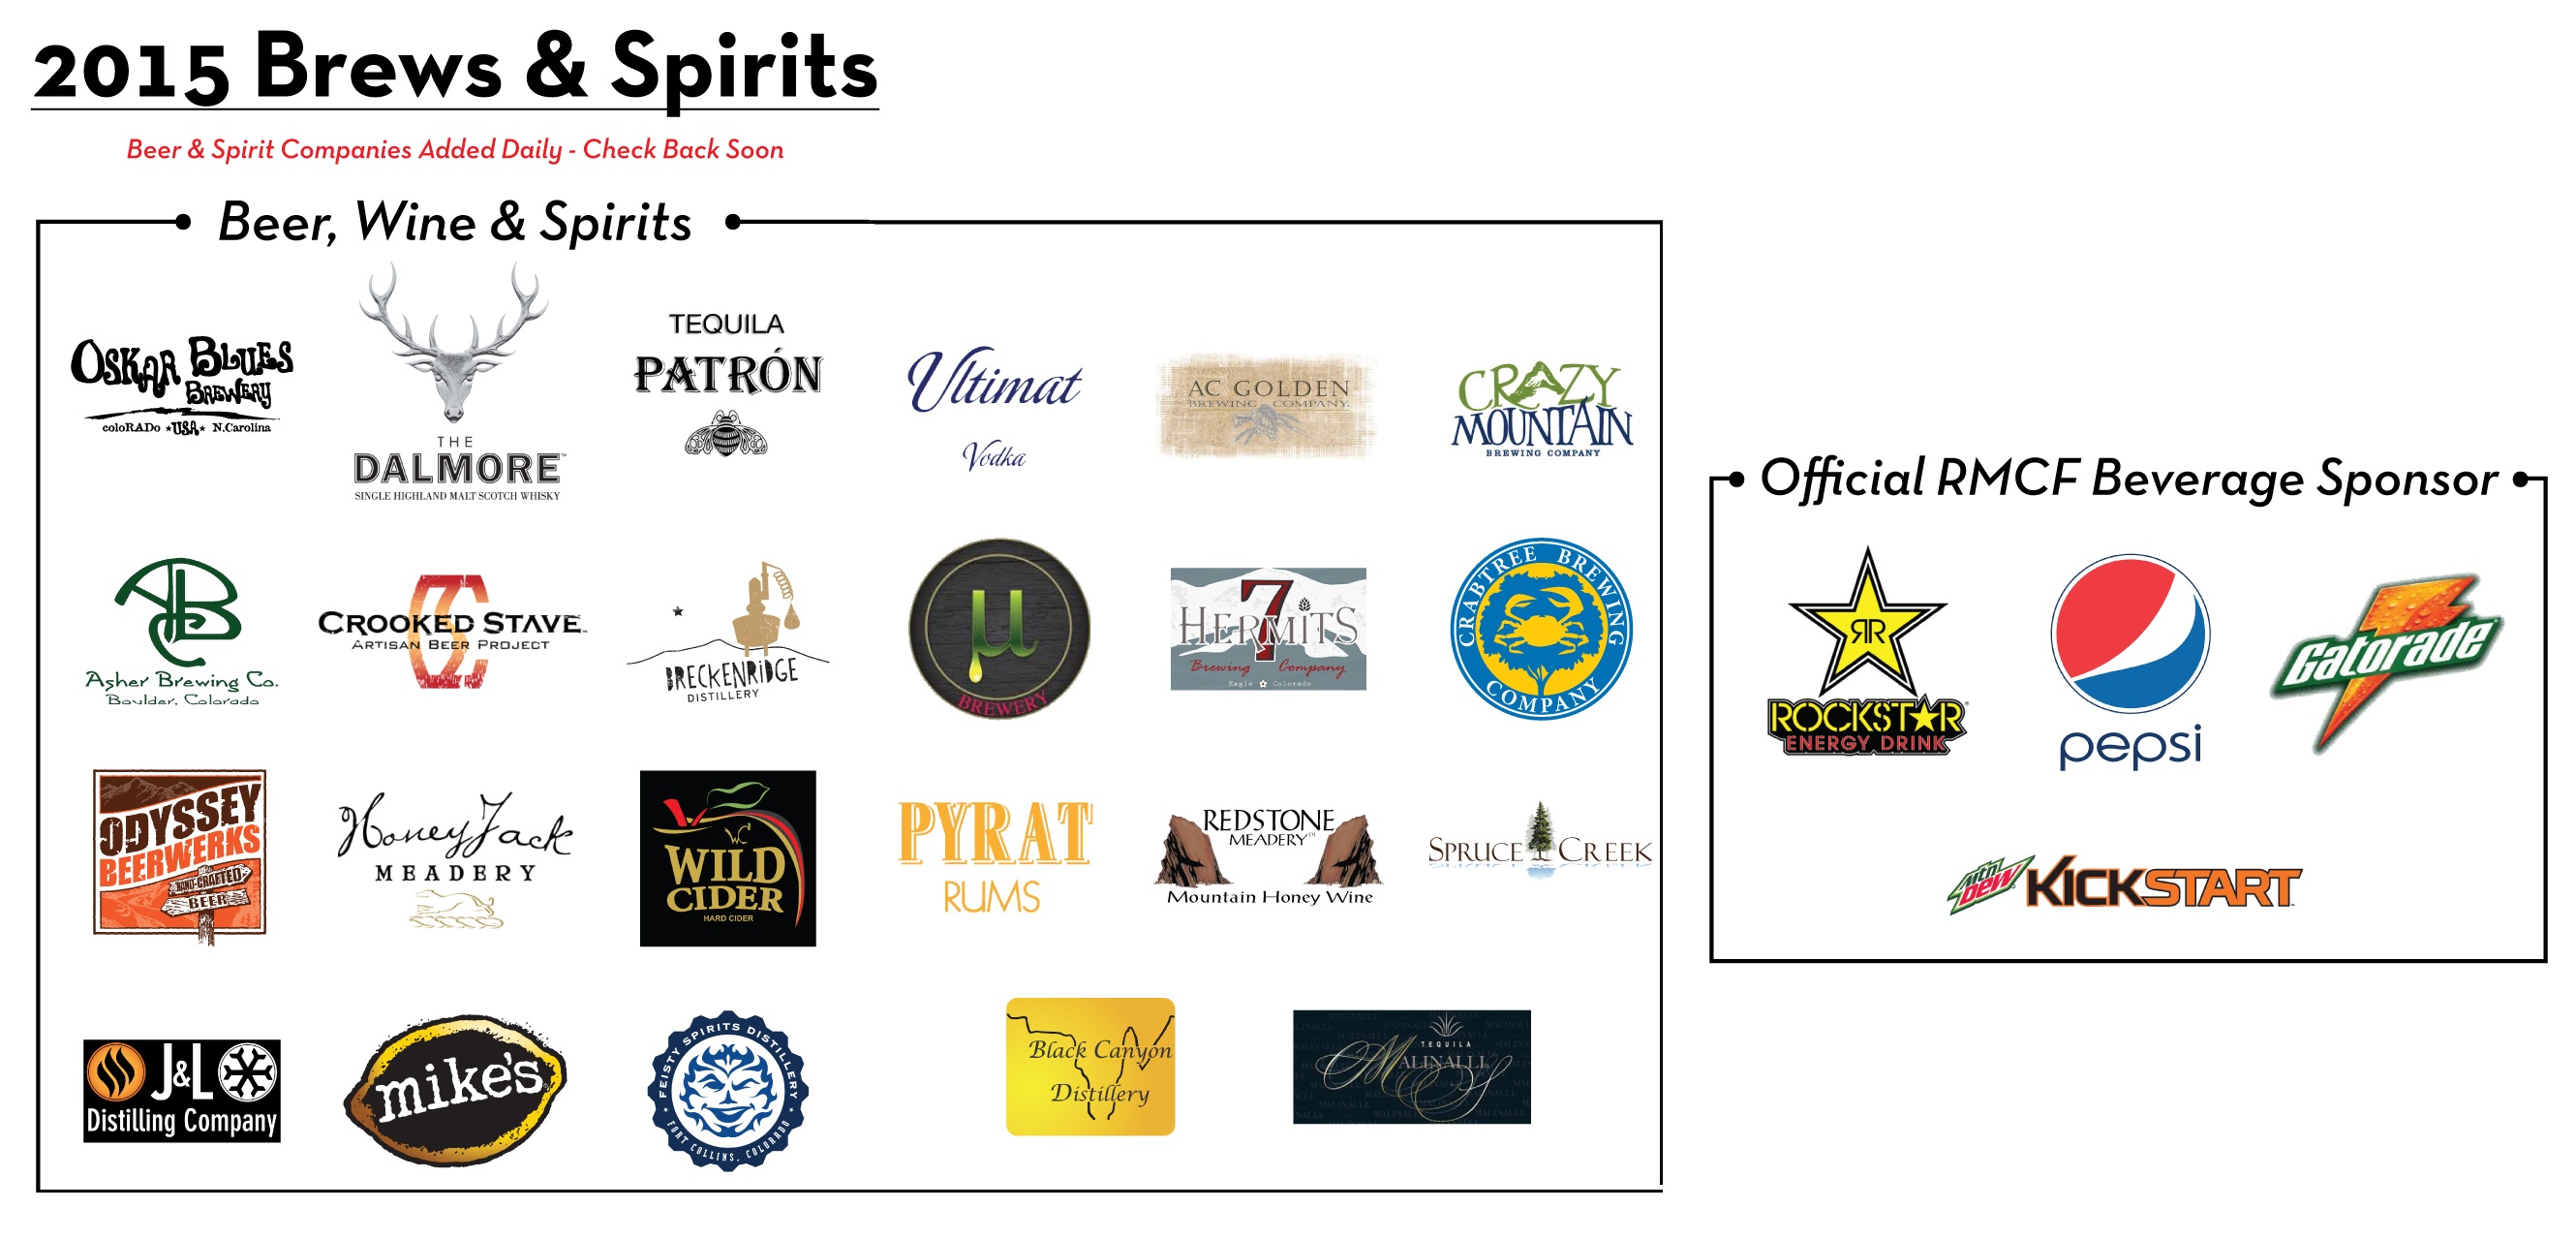 2015 Brews & Spirits and Beverage Sponsors